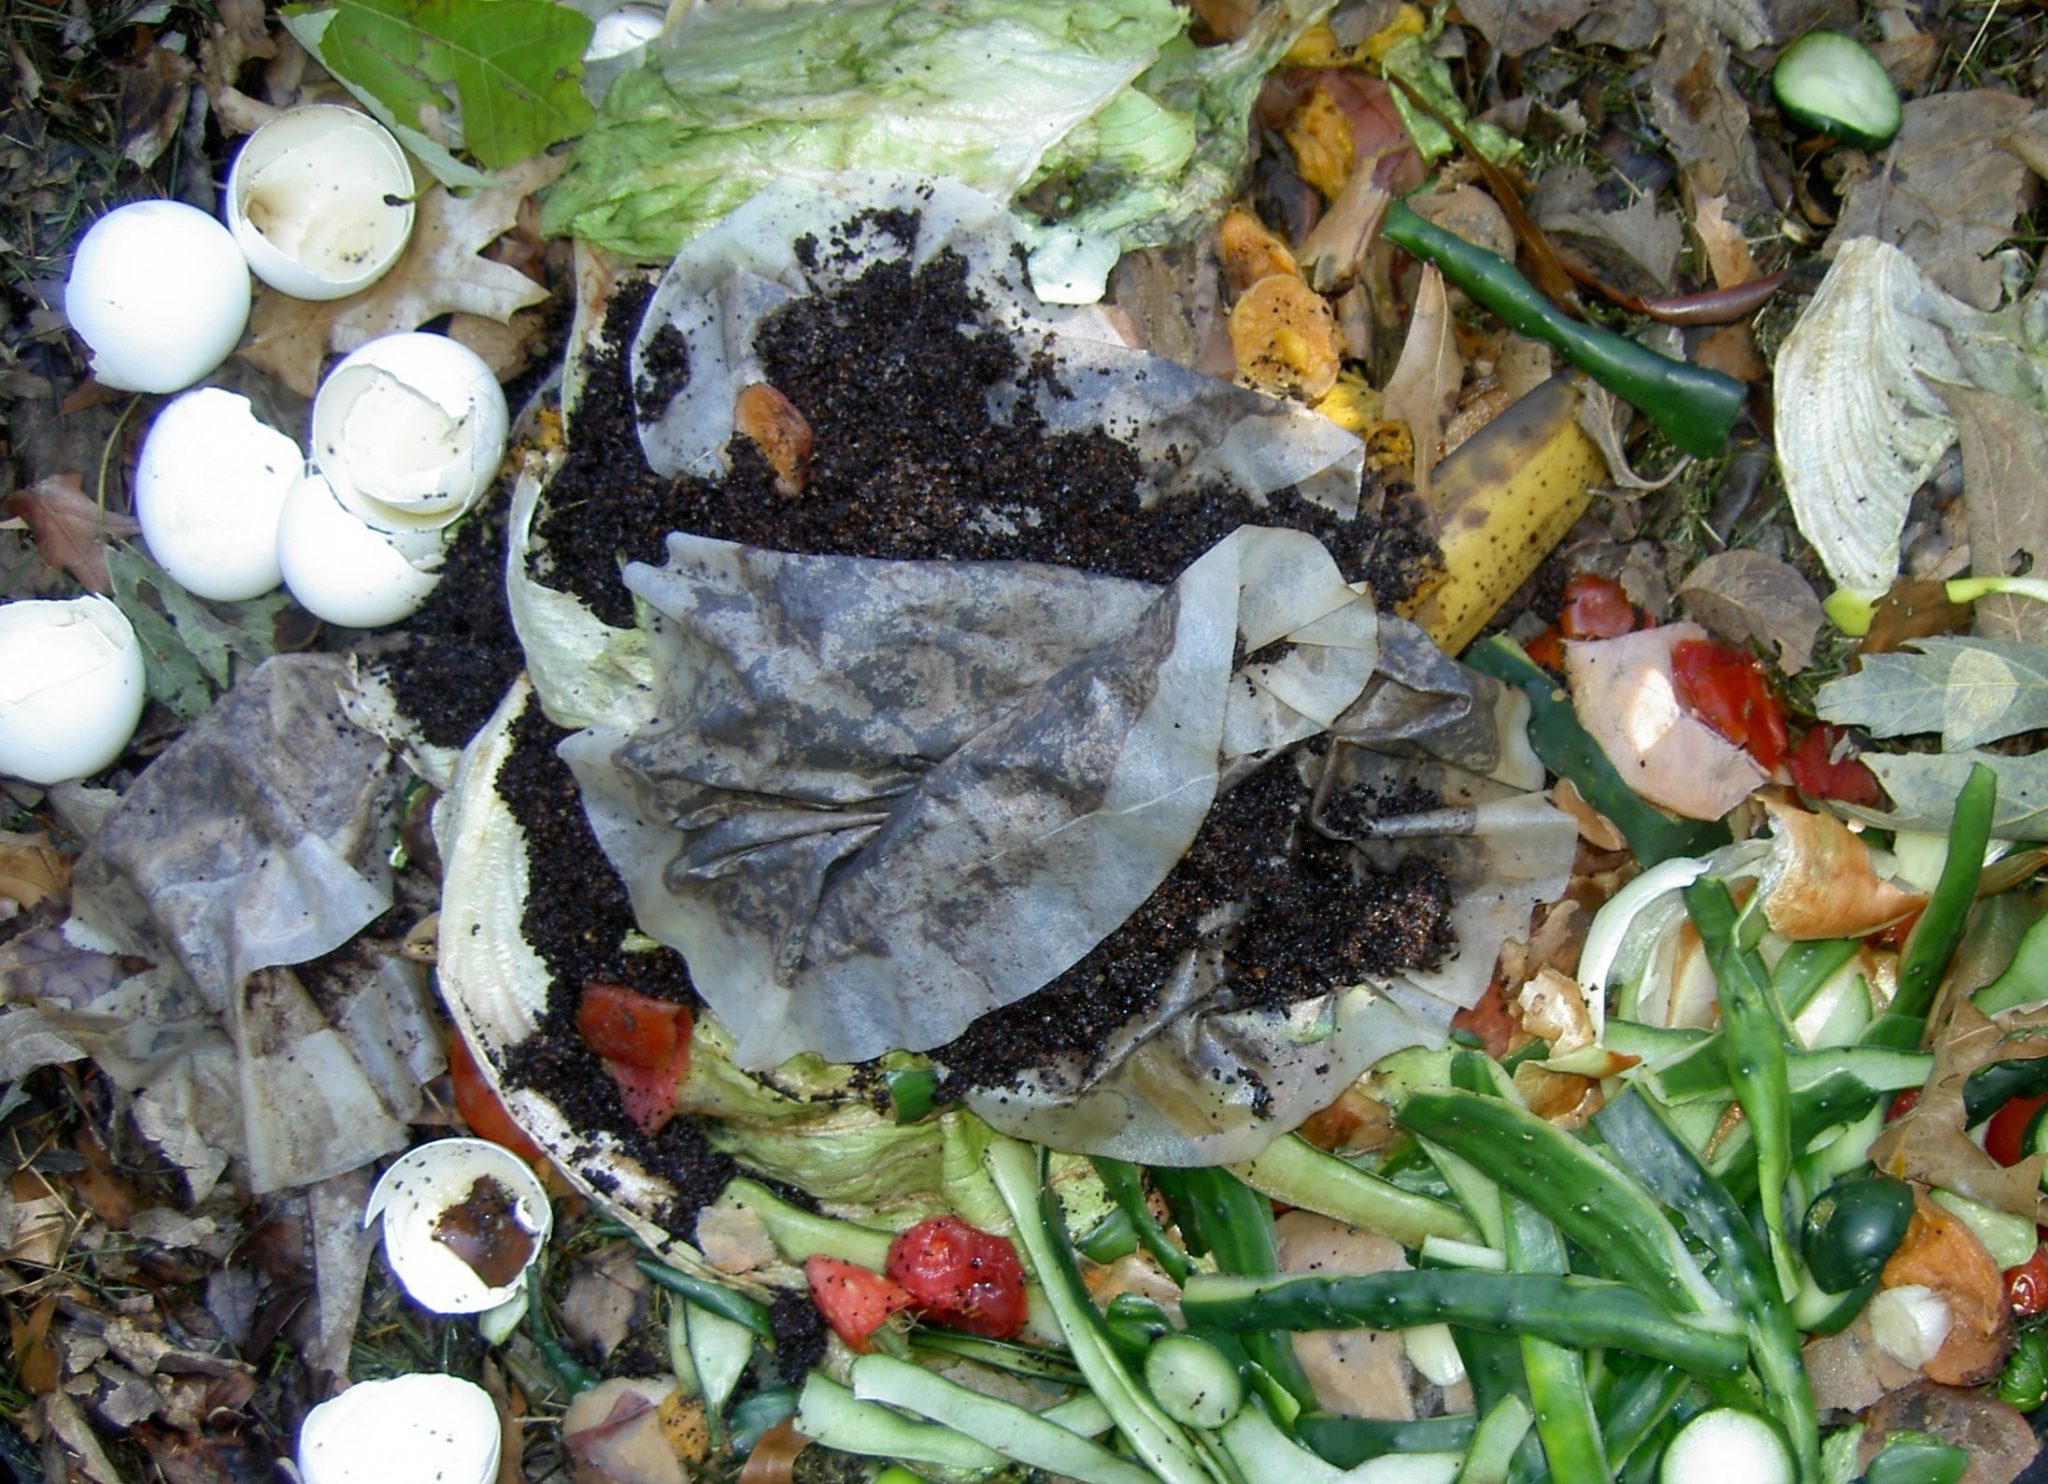 Kitchen Scraps Make Great Compost